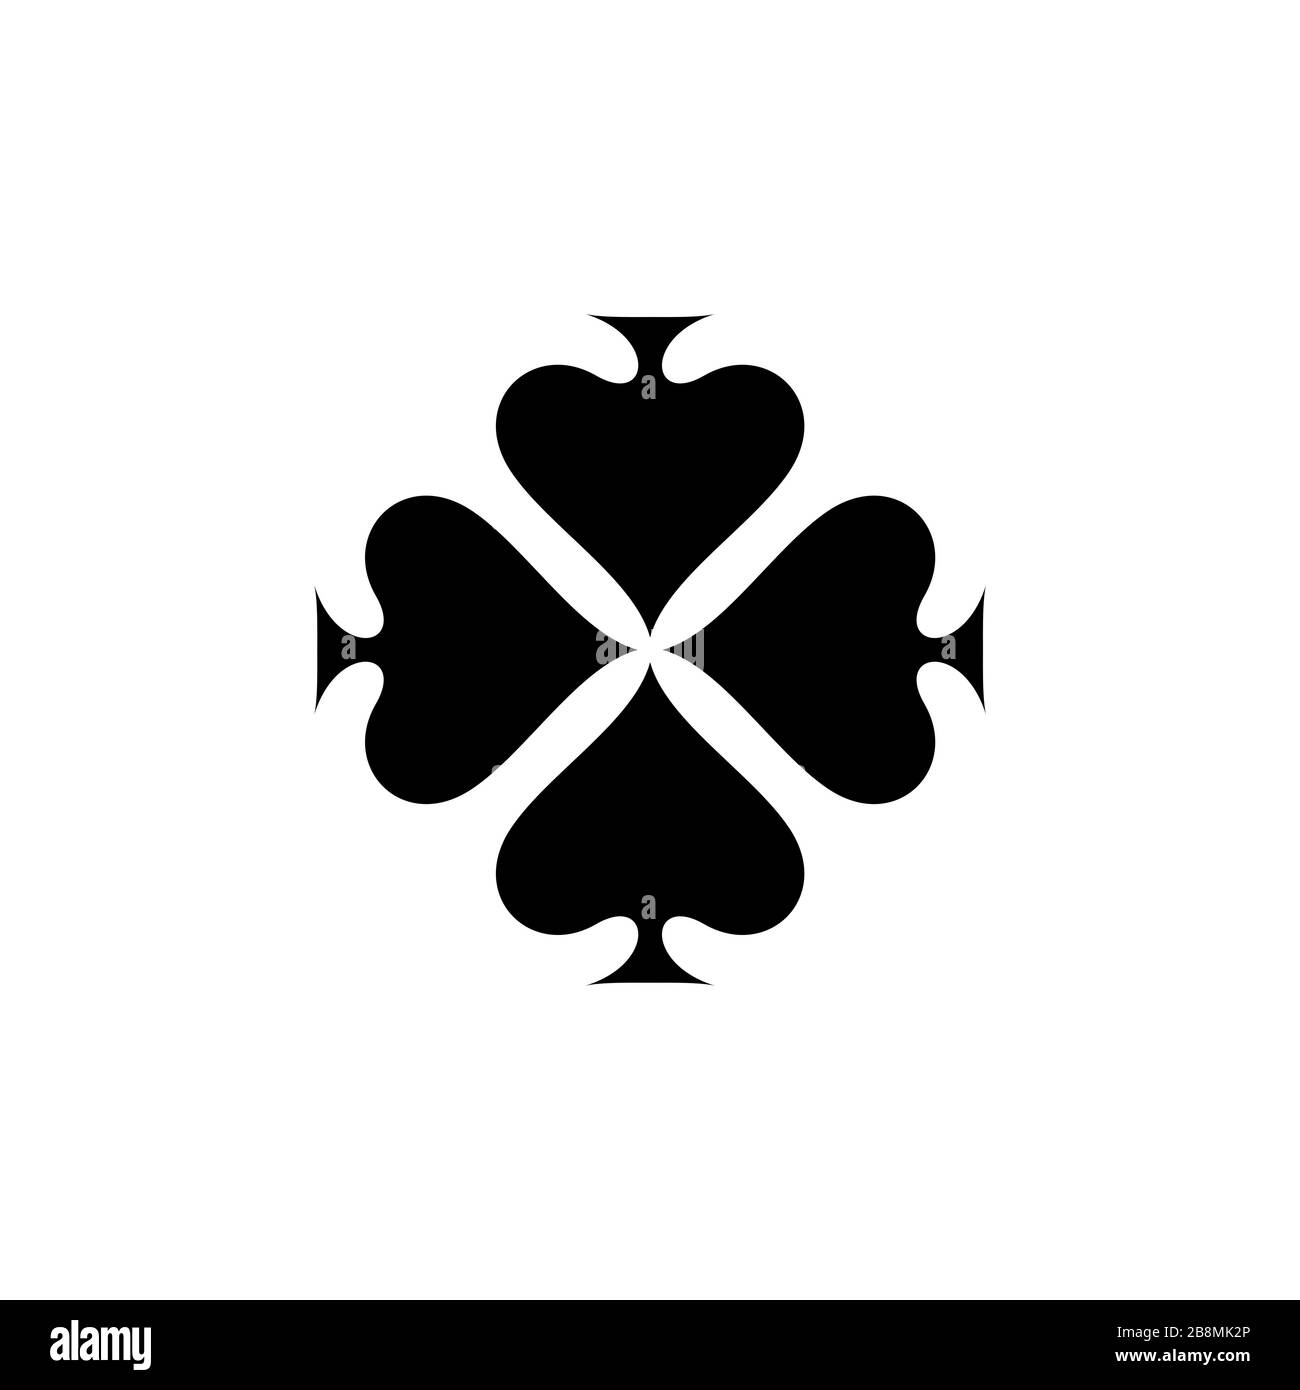 Spade Symbol Poker Card Logo Illustration Design. Vector EPS 10 Stock Photo  - Alamy